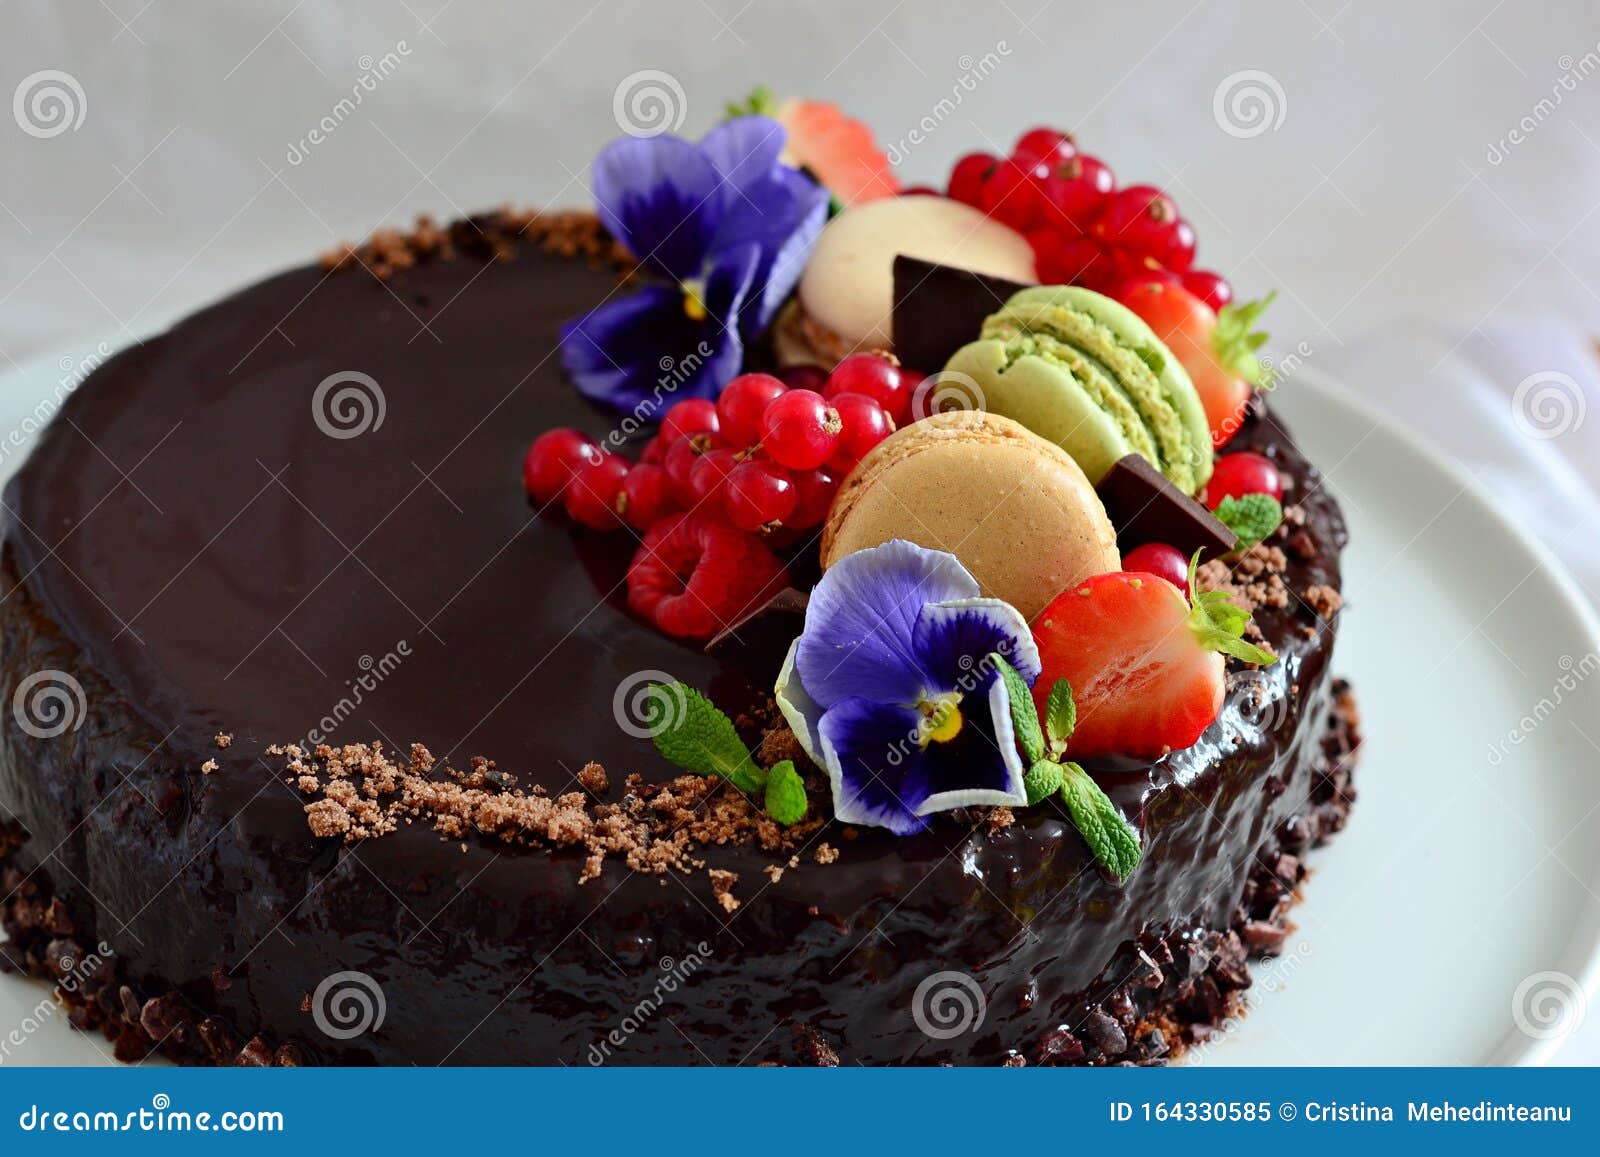 Chocolate Cake Decorated with Fruit Stock Image - Image of food, sweet ...